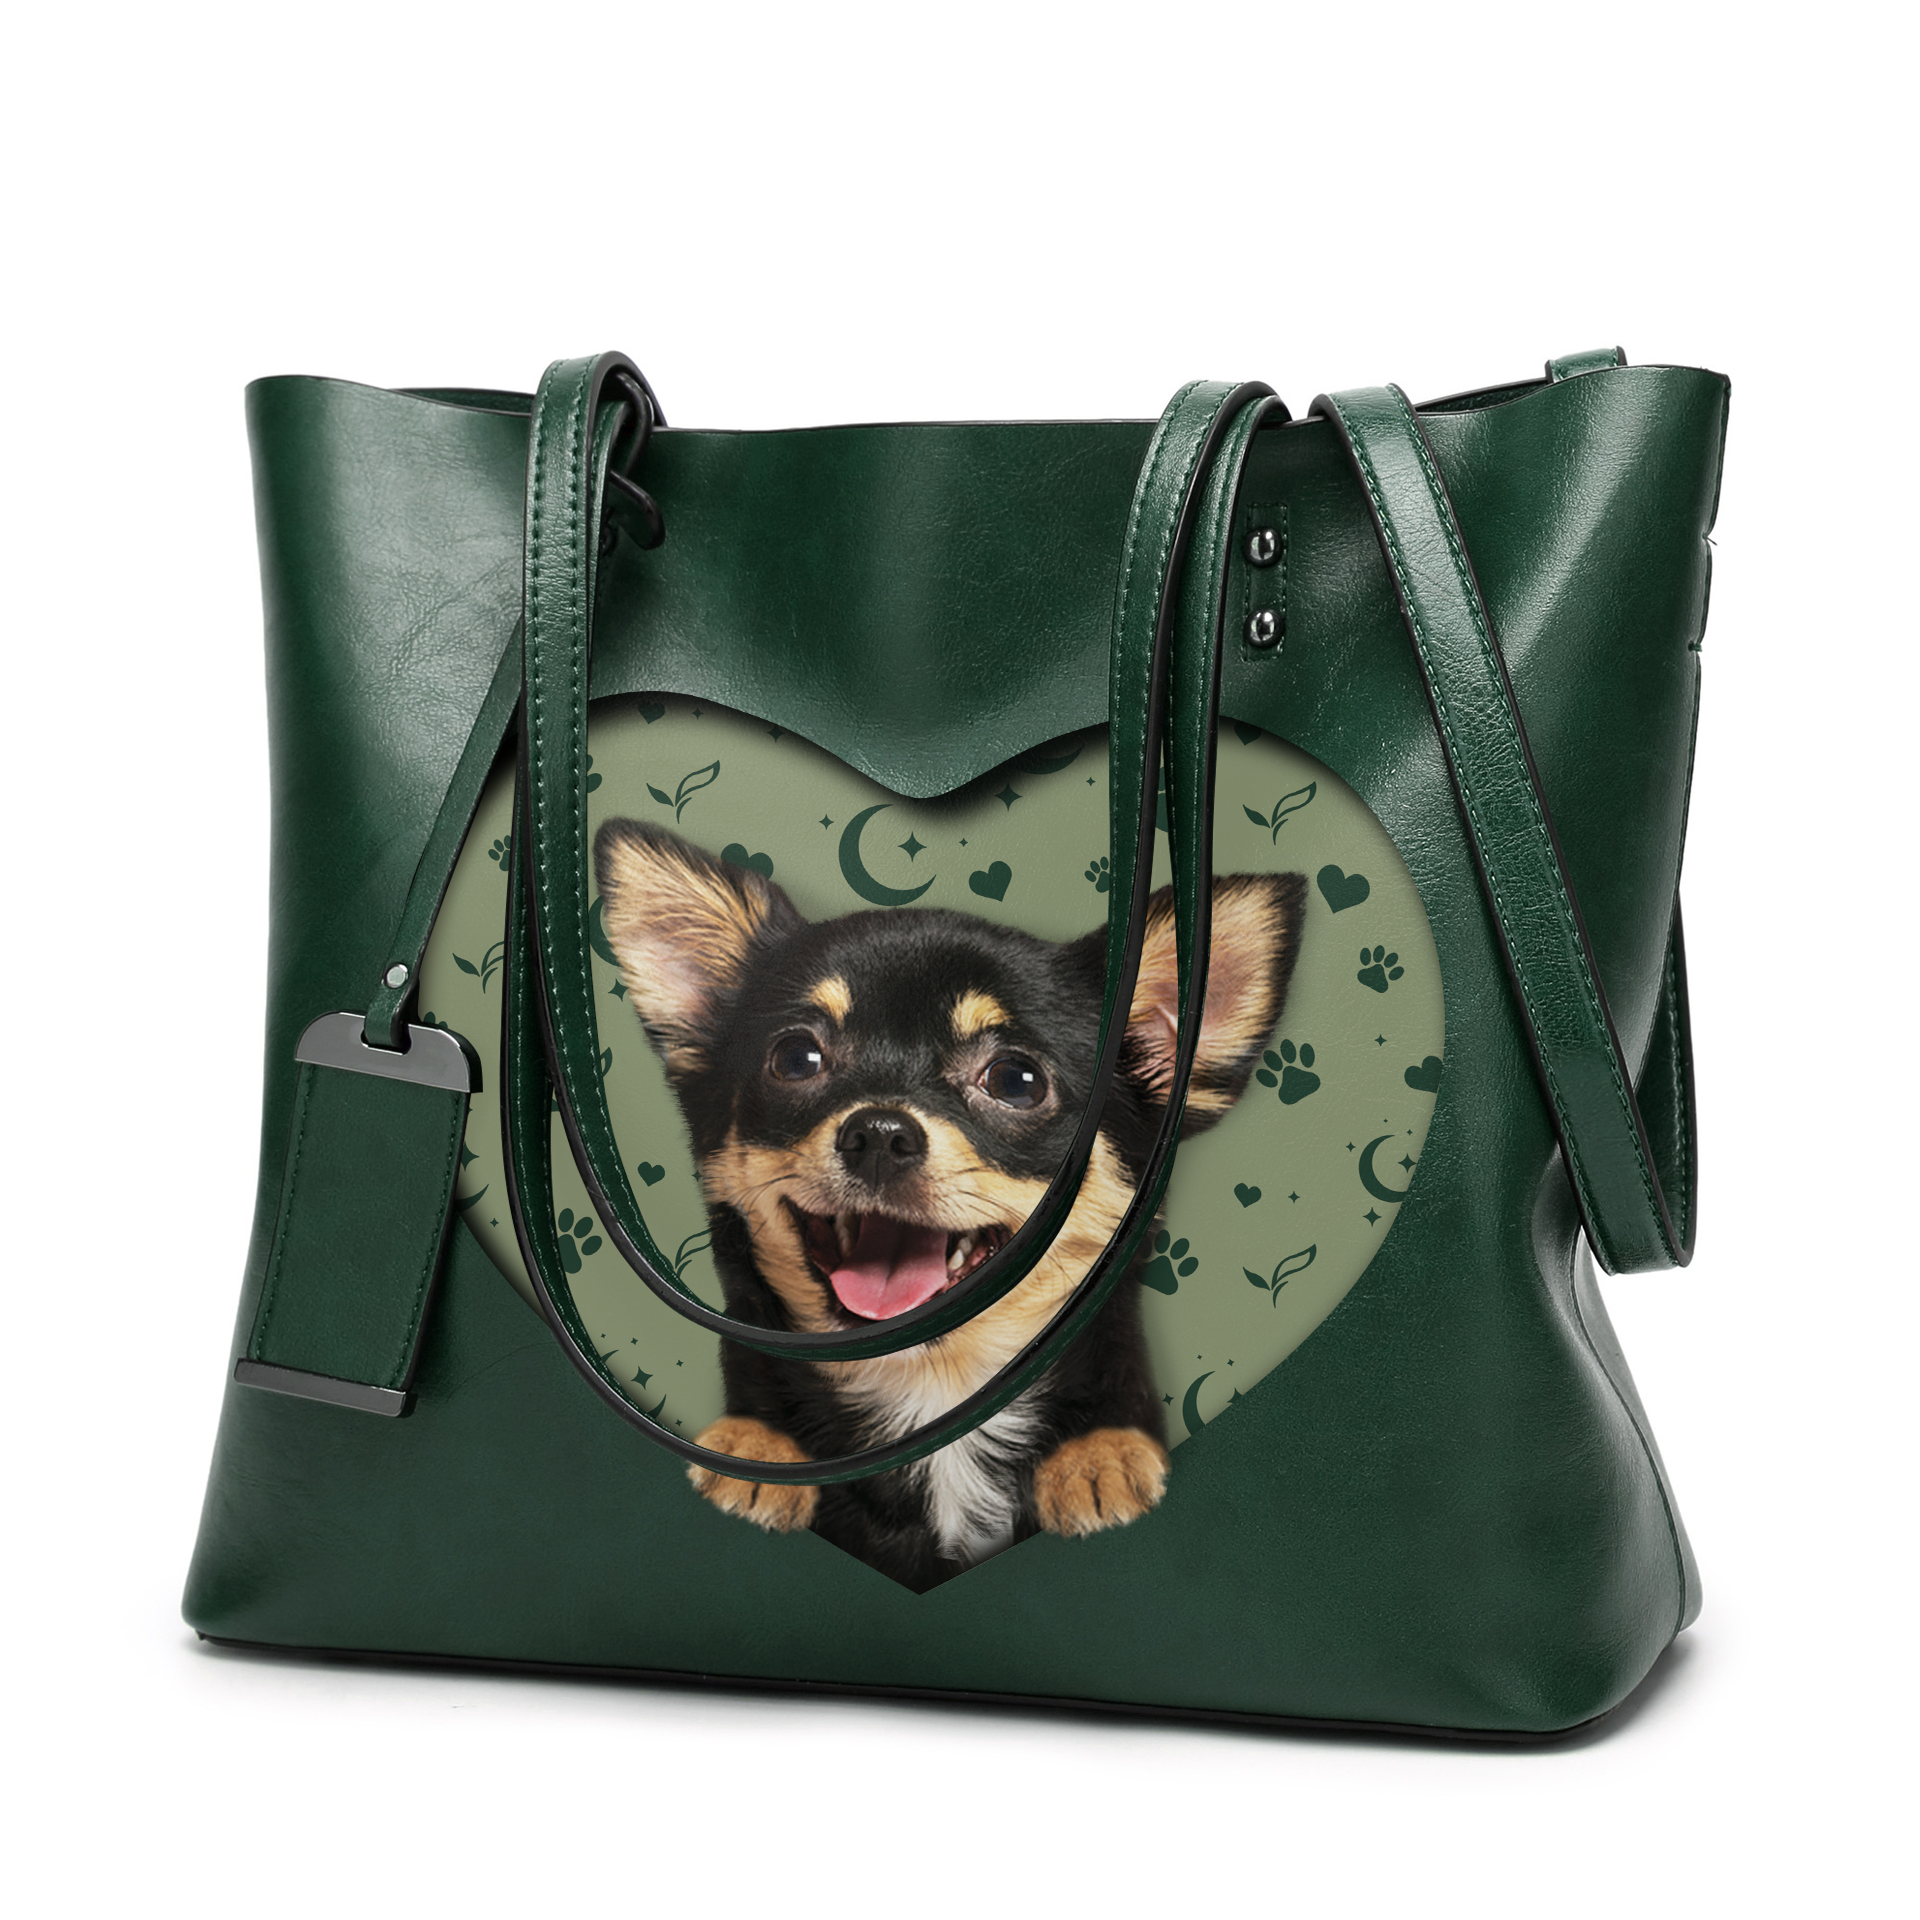 I Know I'm Cute - Chihuahua Glamour Handbag V3 - 5